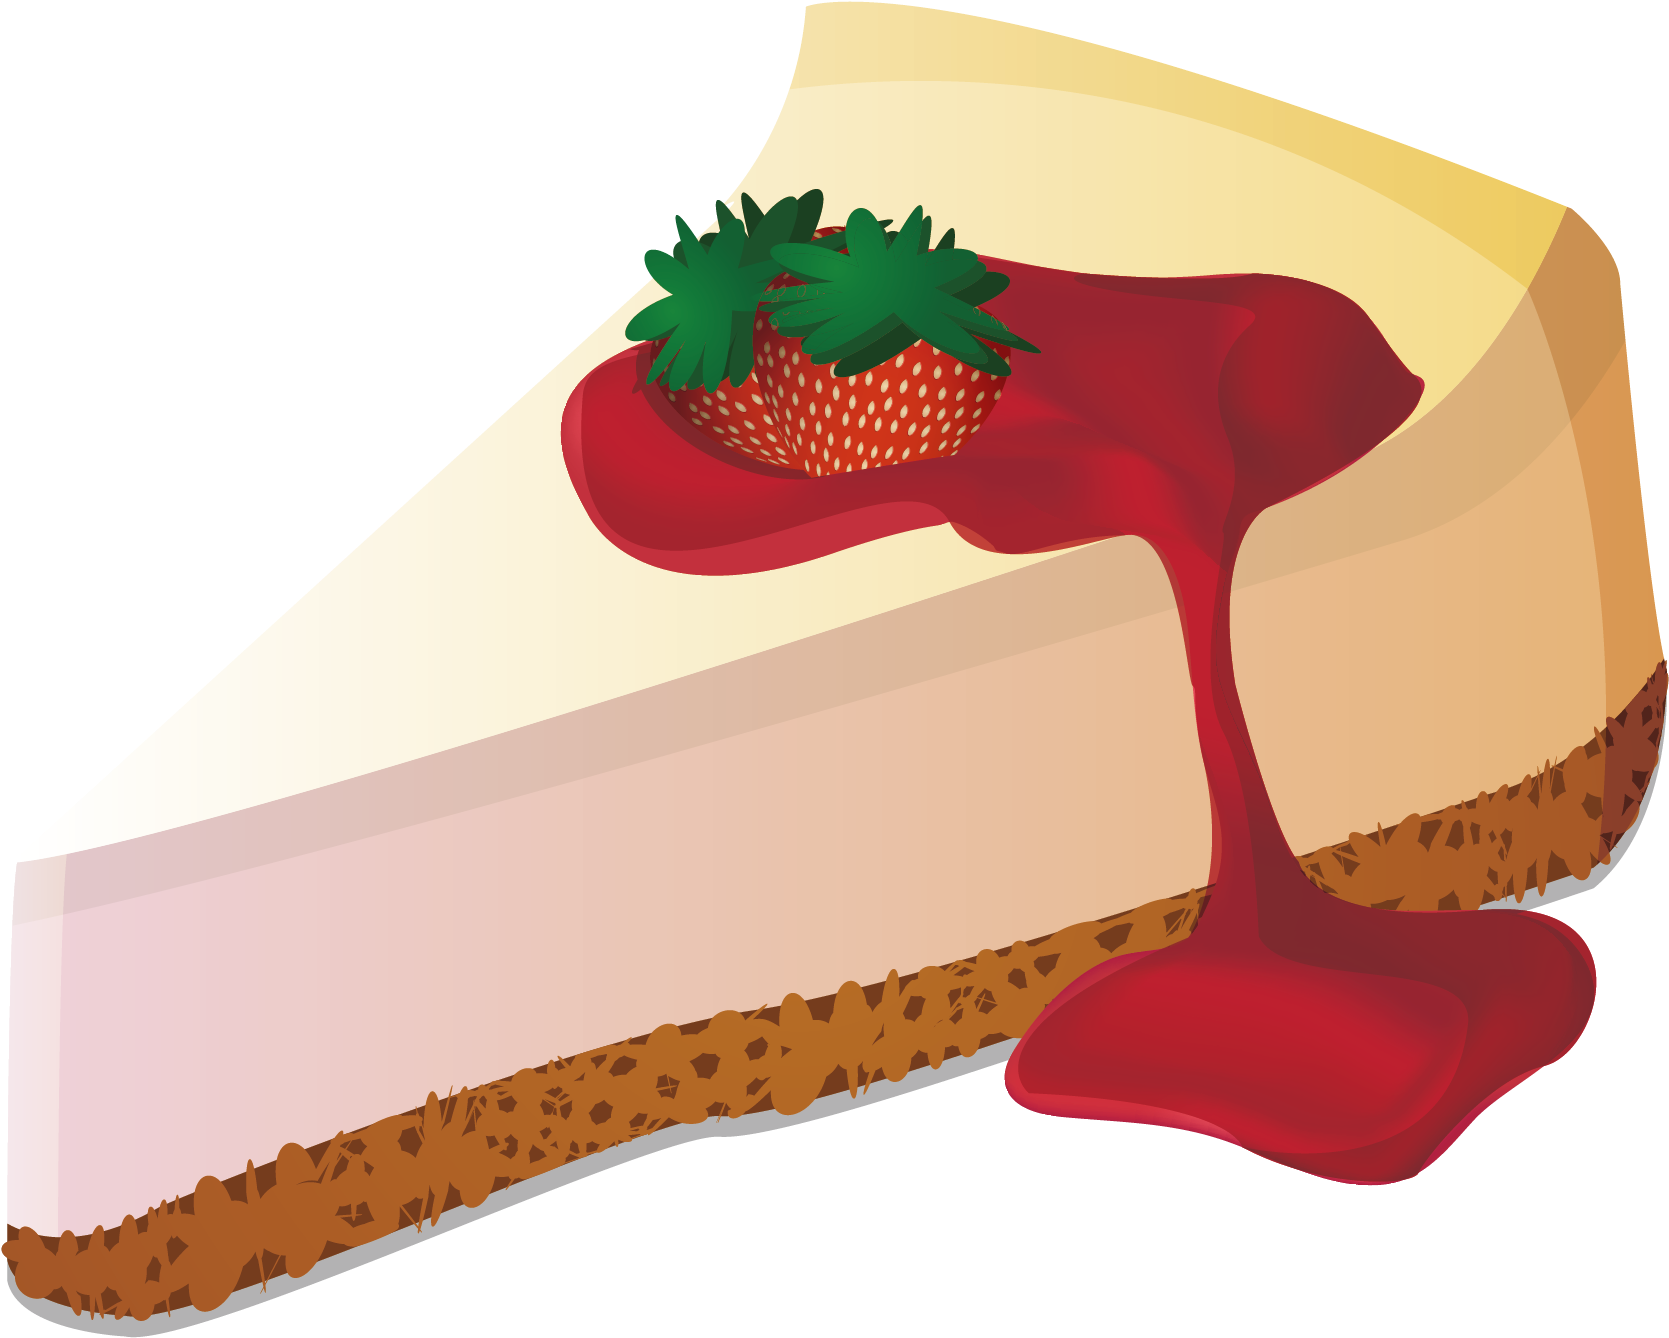 Strawberry Cream Cake Strawberry Pie Cheesecake - Strawberry Cream Cake (1875x1875)